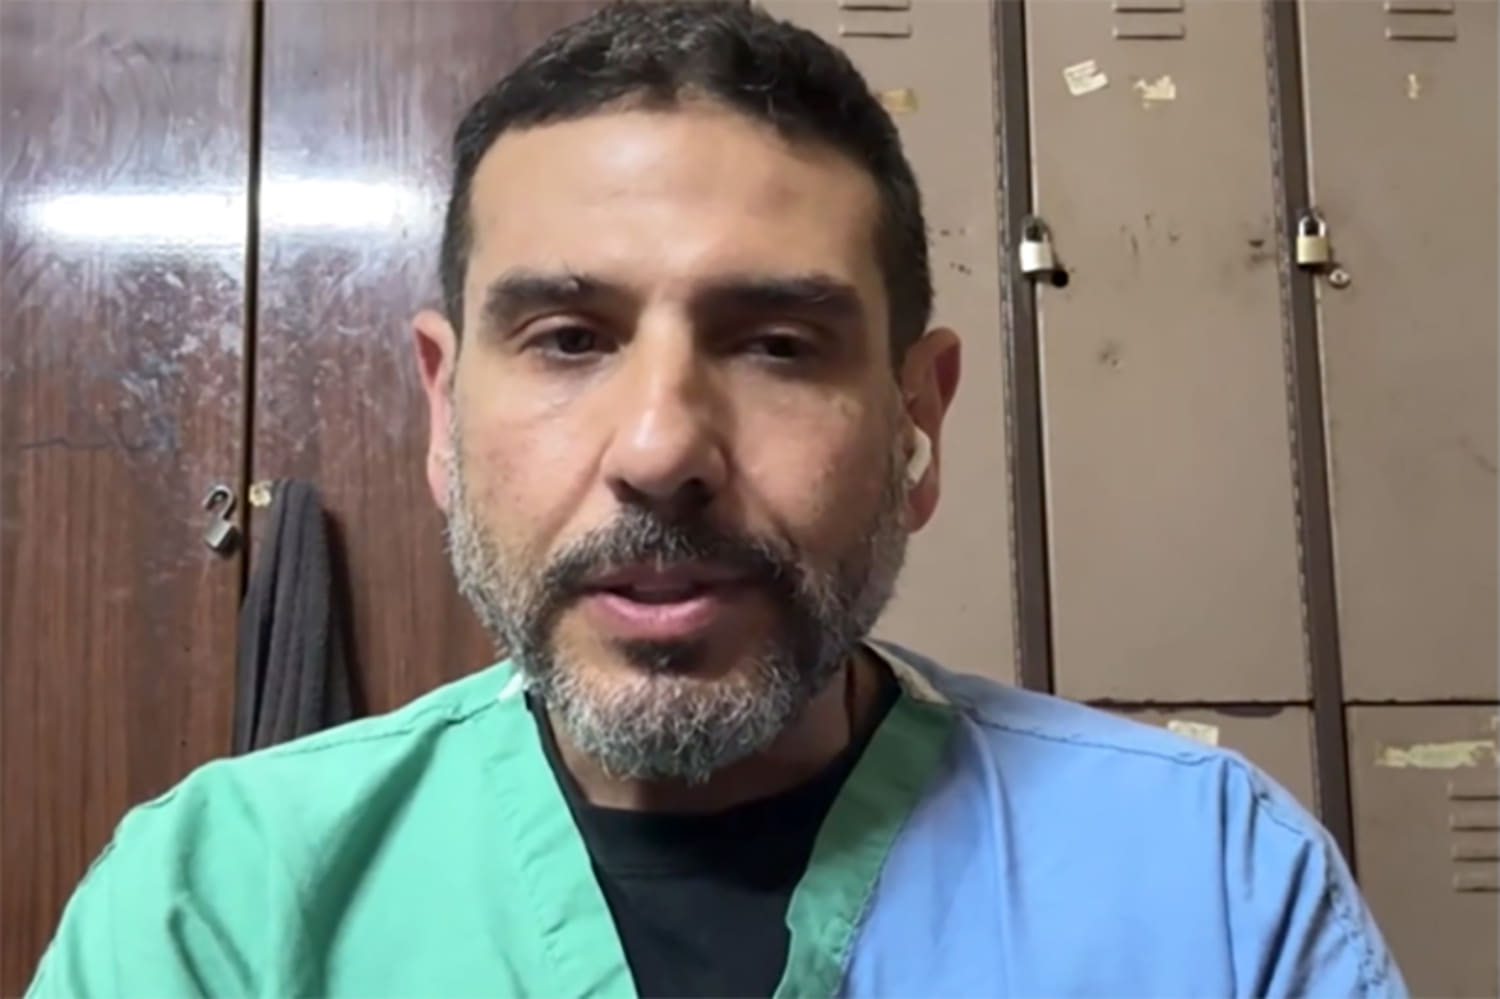 17 of 20 U.S. doctors stuck in Gaza depart with the help of U.S. officials, source says